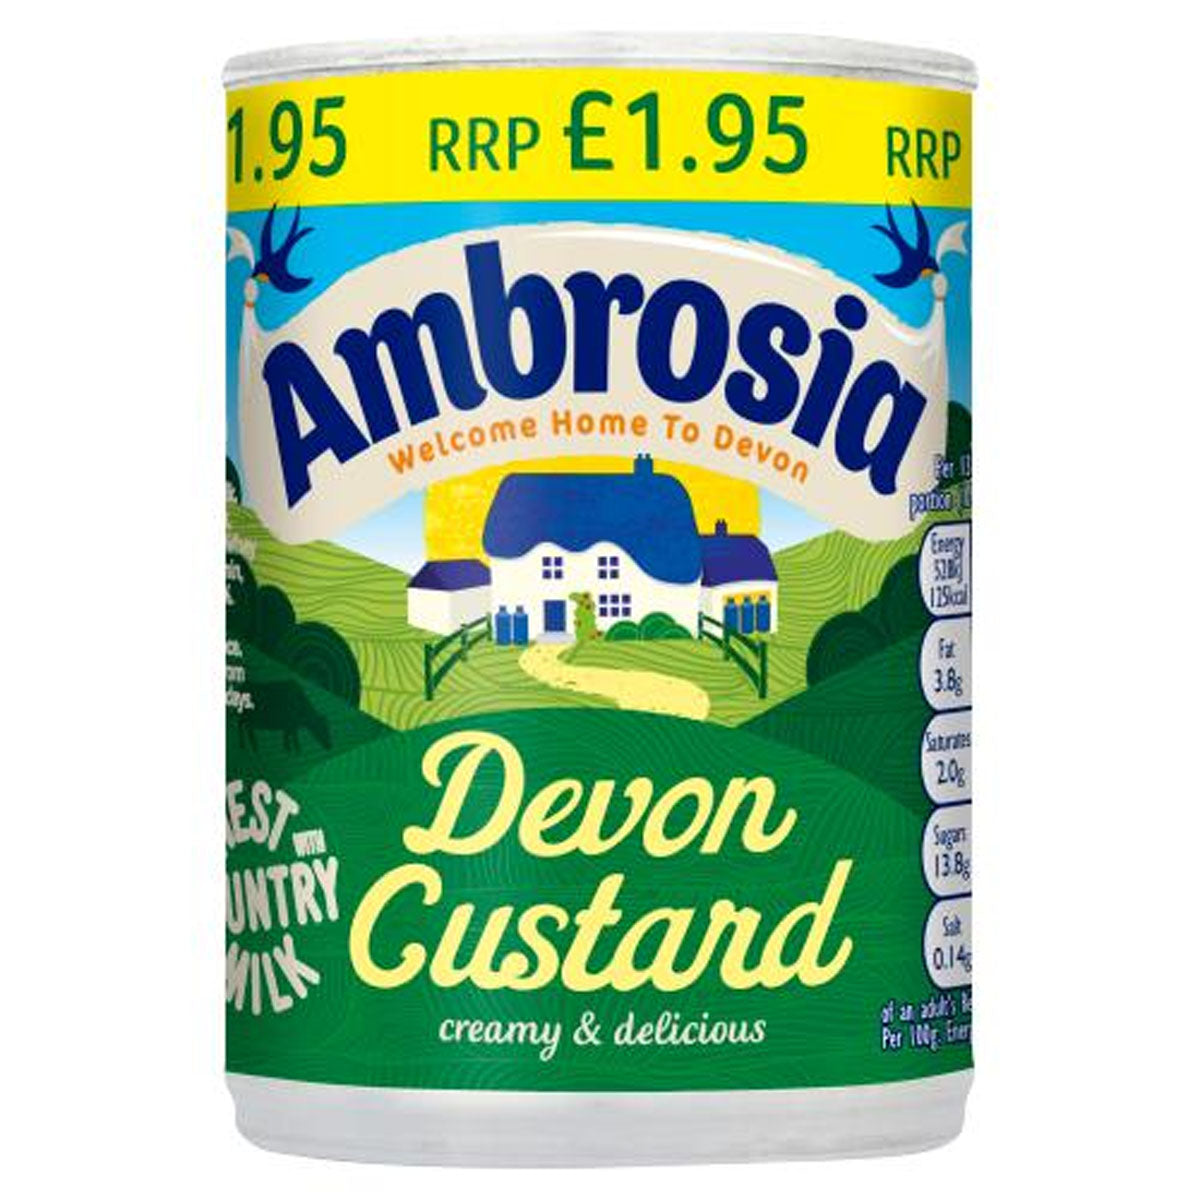 A can of Ambrosia - Devon Custard - 400g.